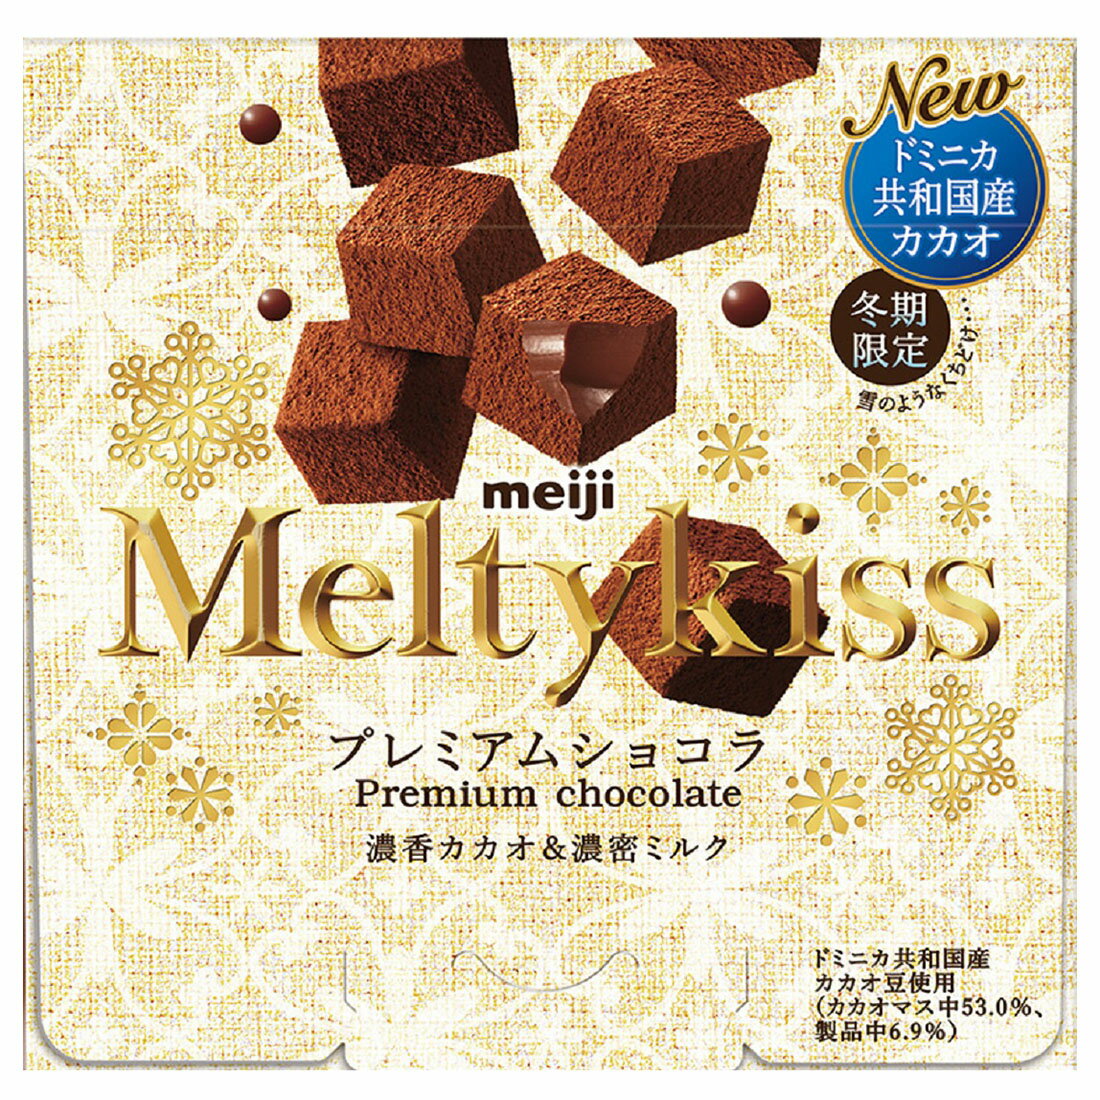 Melty Kiss Premium Chocolate